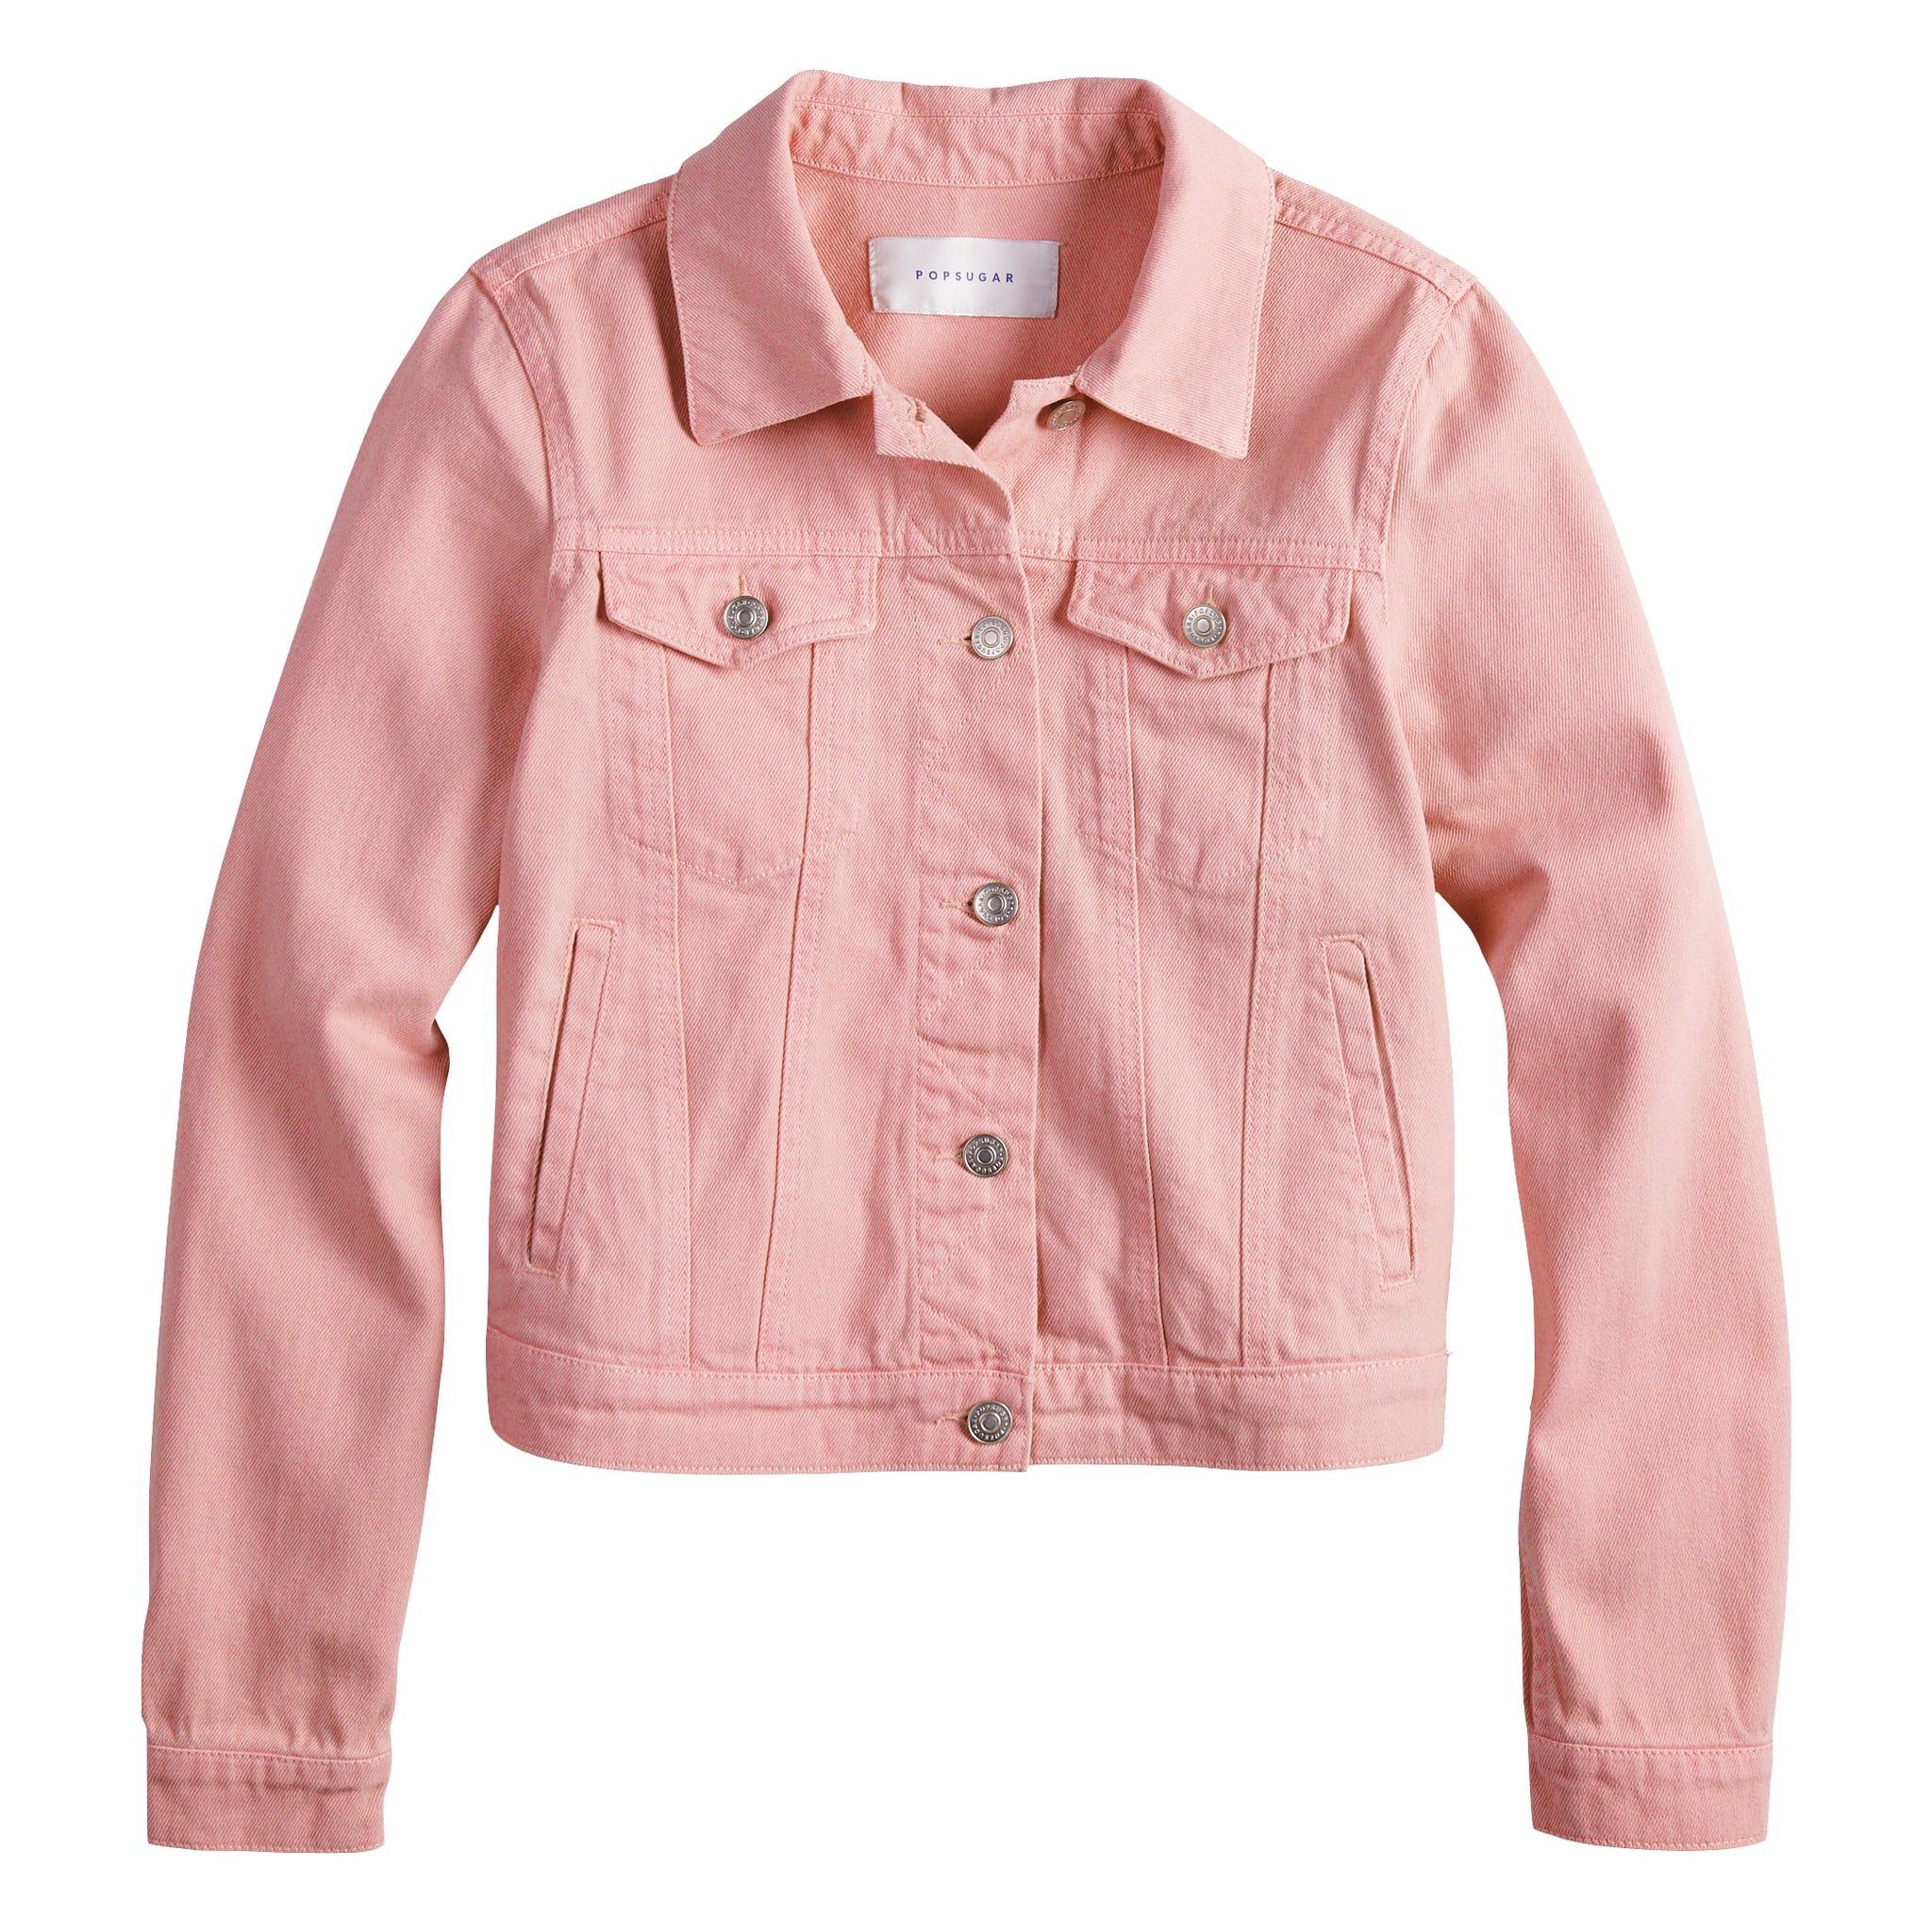 celebrity pink jean jacket